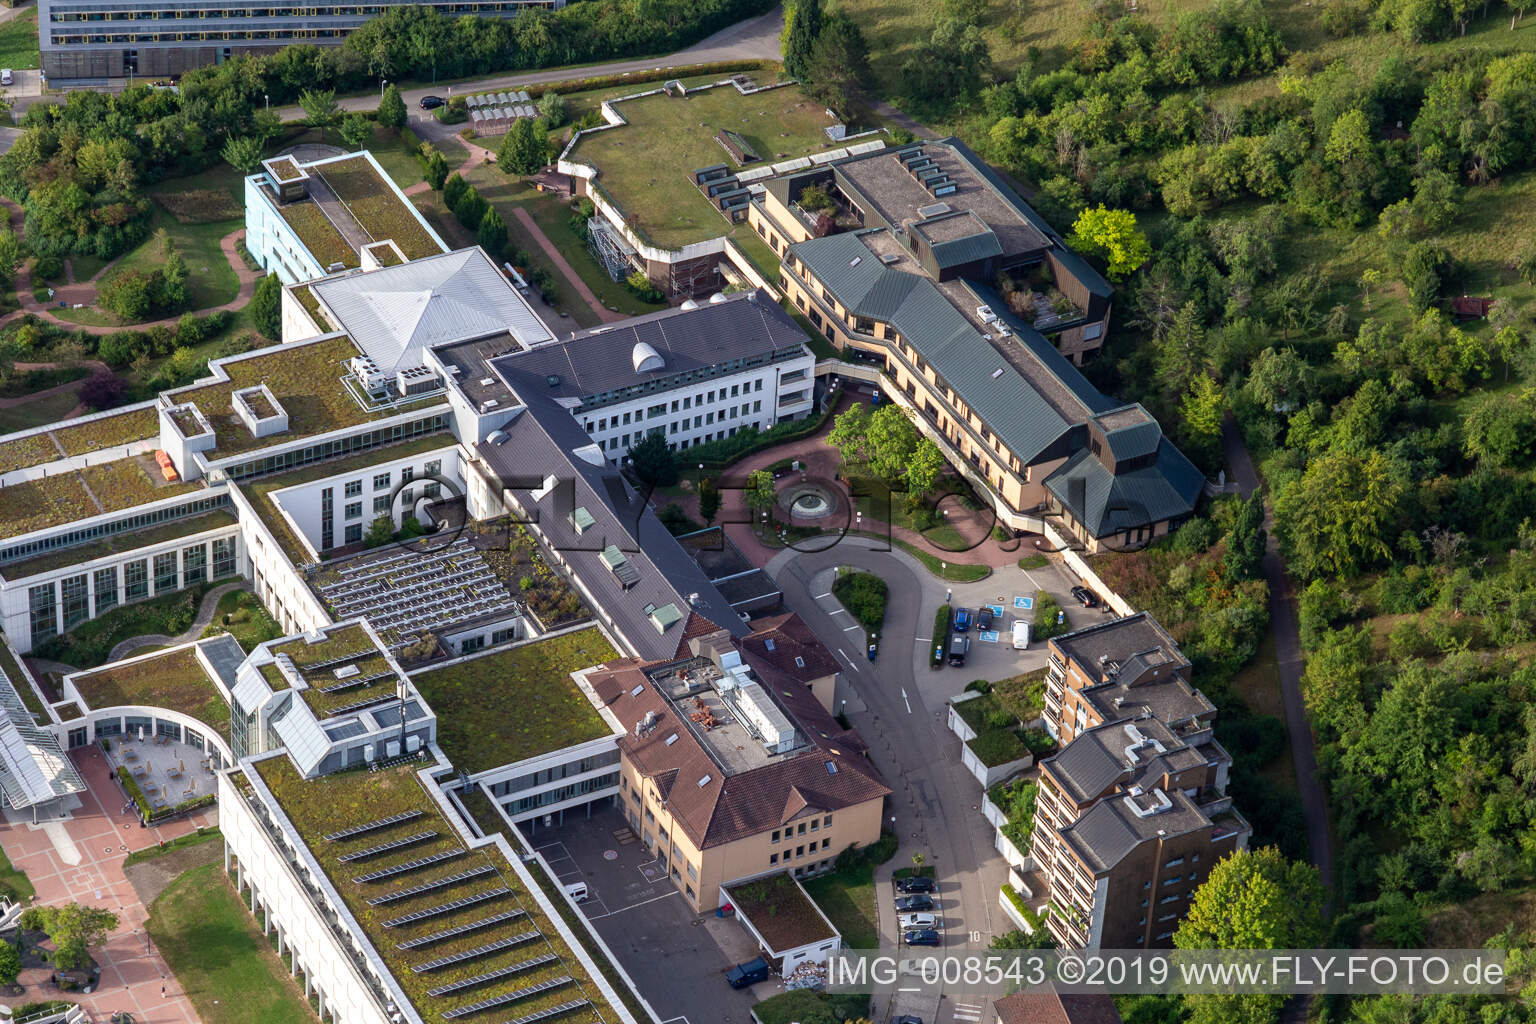 Drone image of BG Accident Clinic Tübingen in Tübingen in the state Baden-Wuerttemberg, Germany